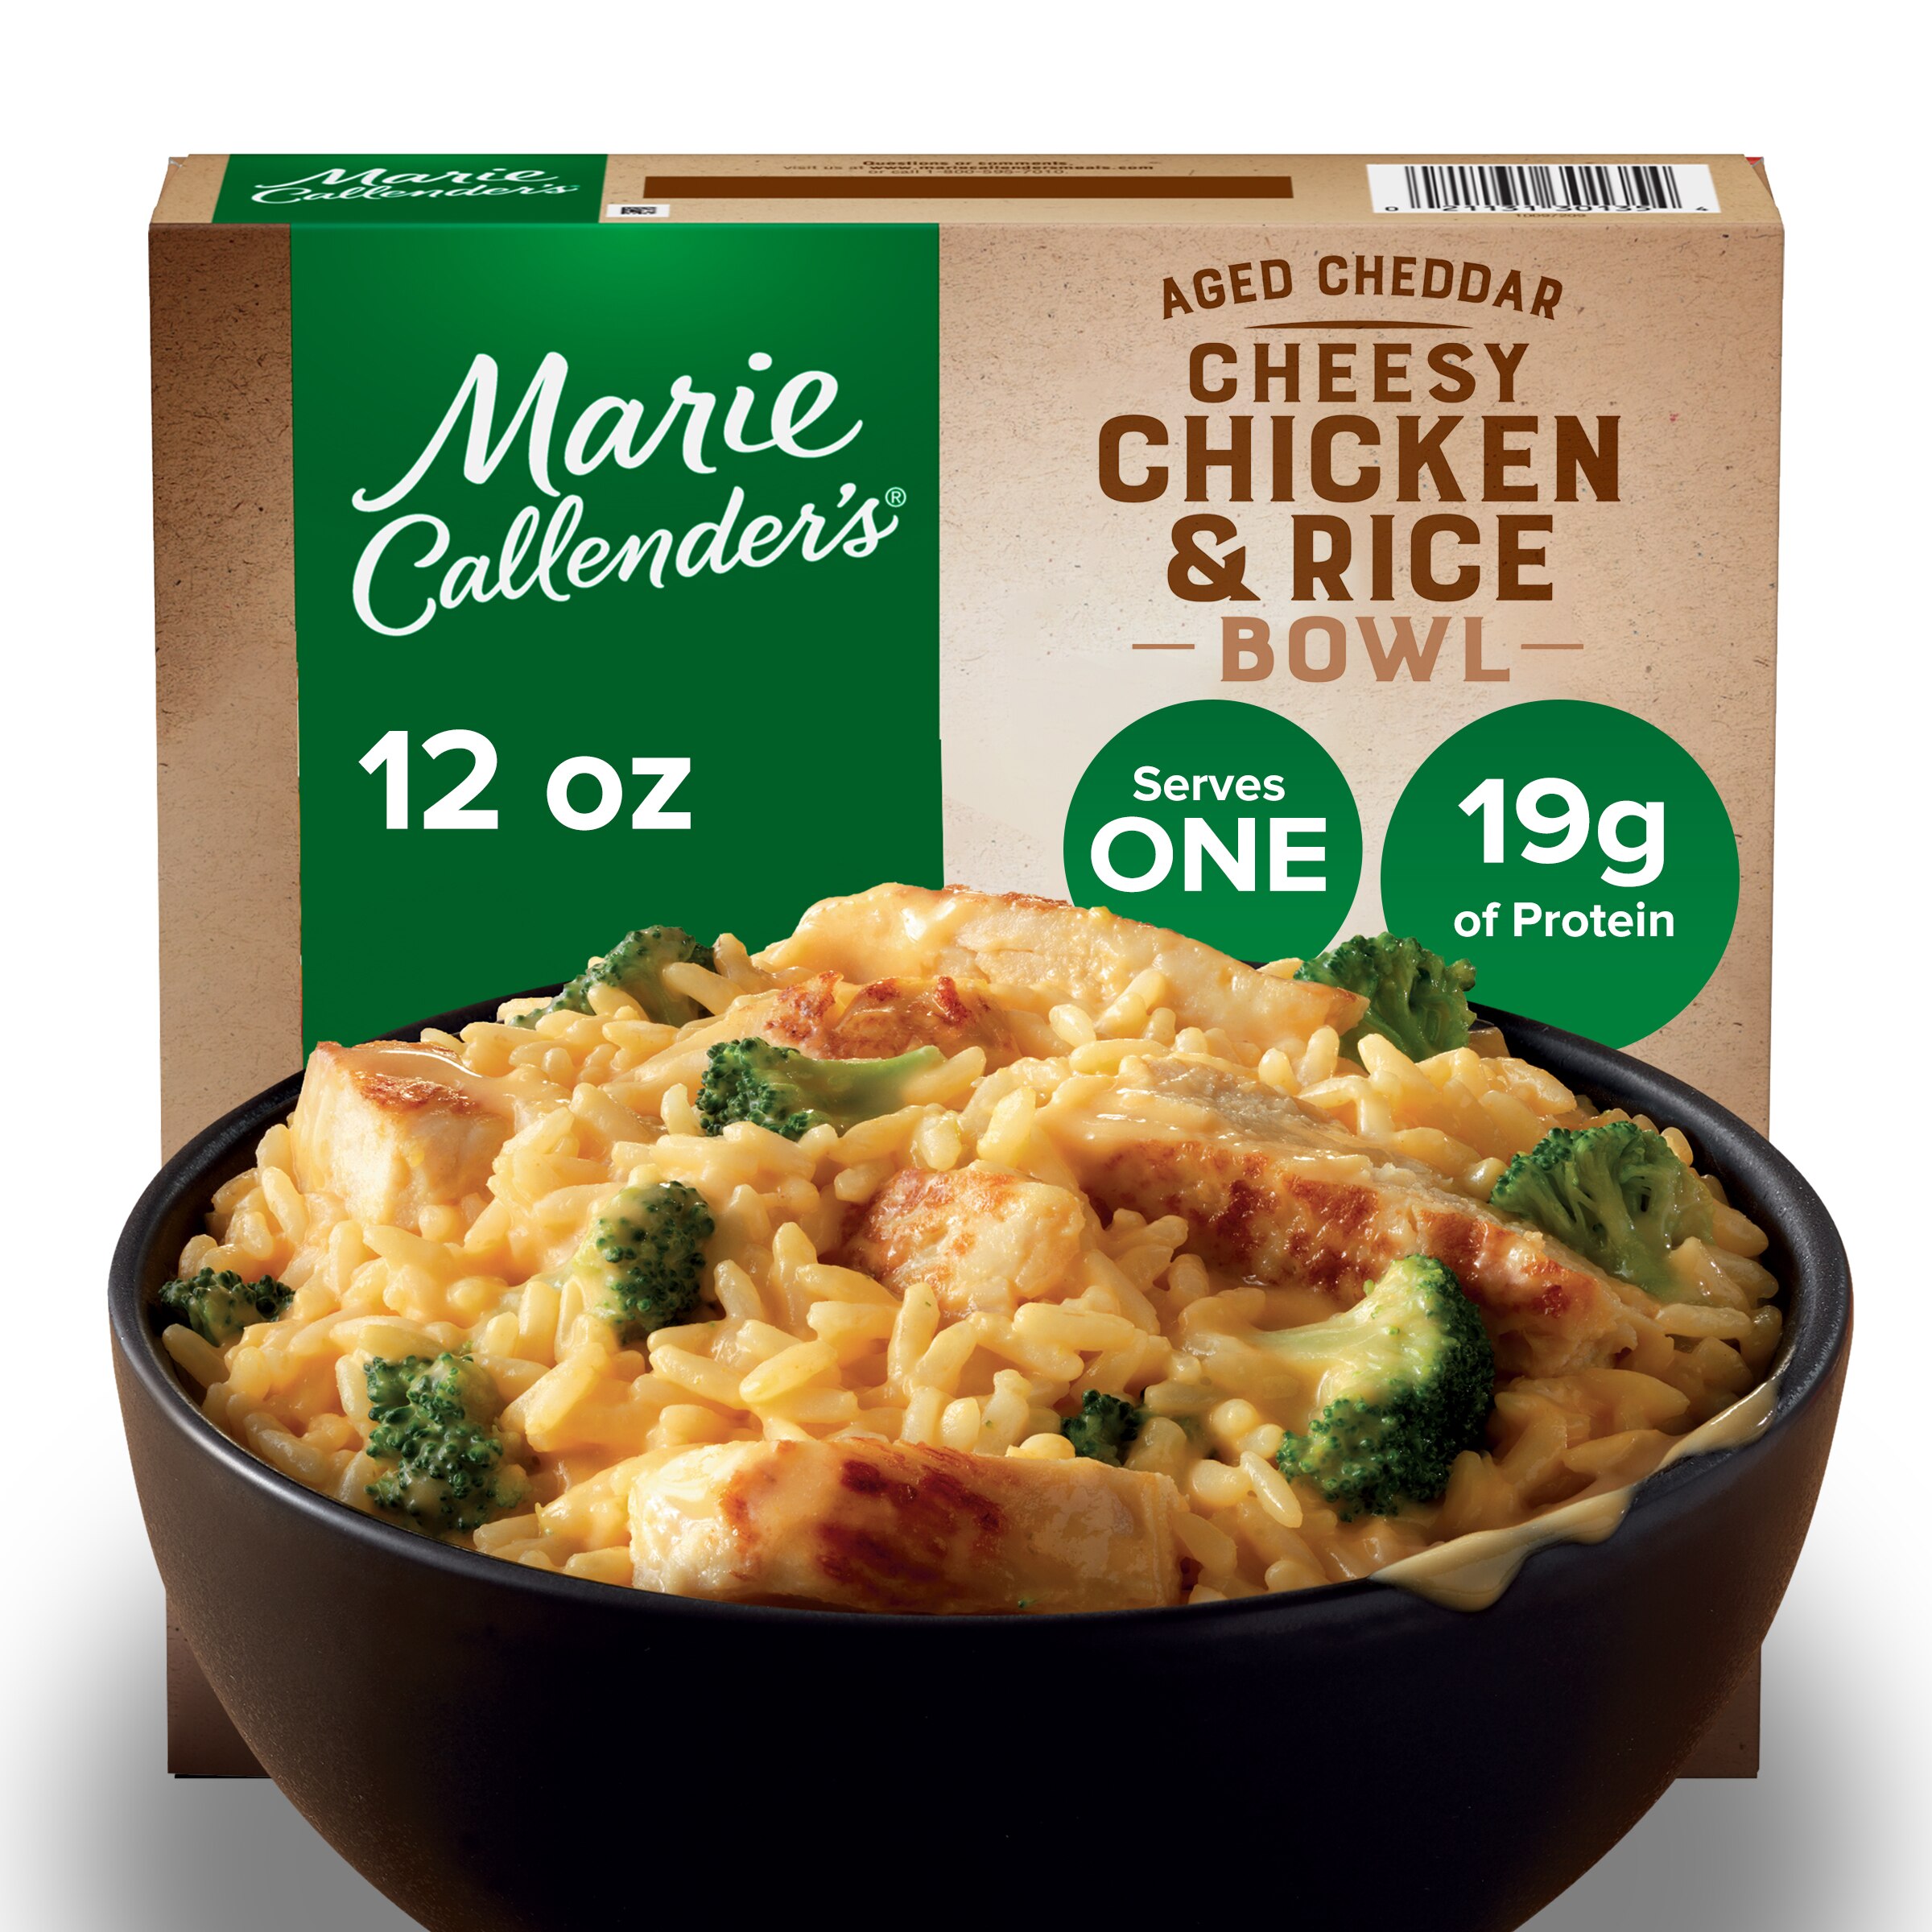 Marie Callender's Aged Cheddar Cheesy Chicken & Rice Bowl, 12 Oz , CVS